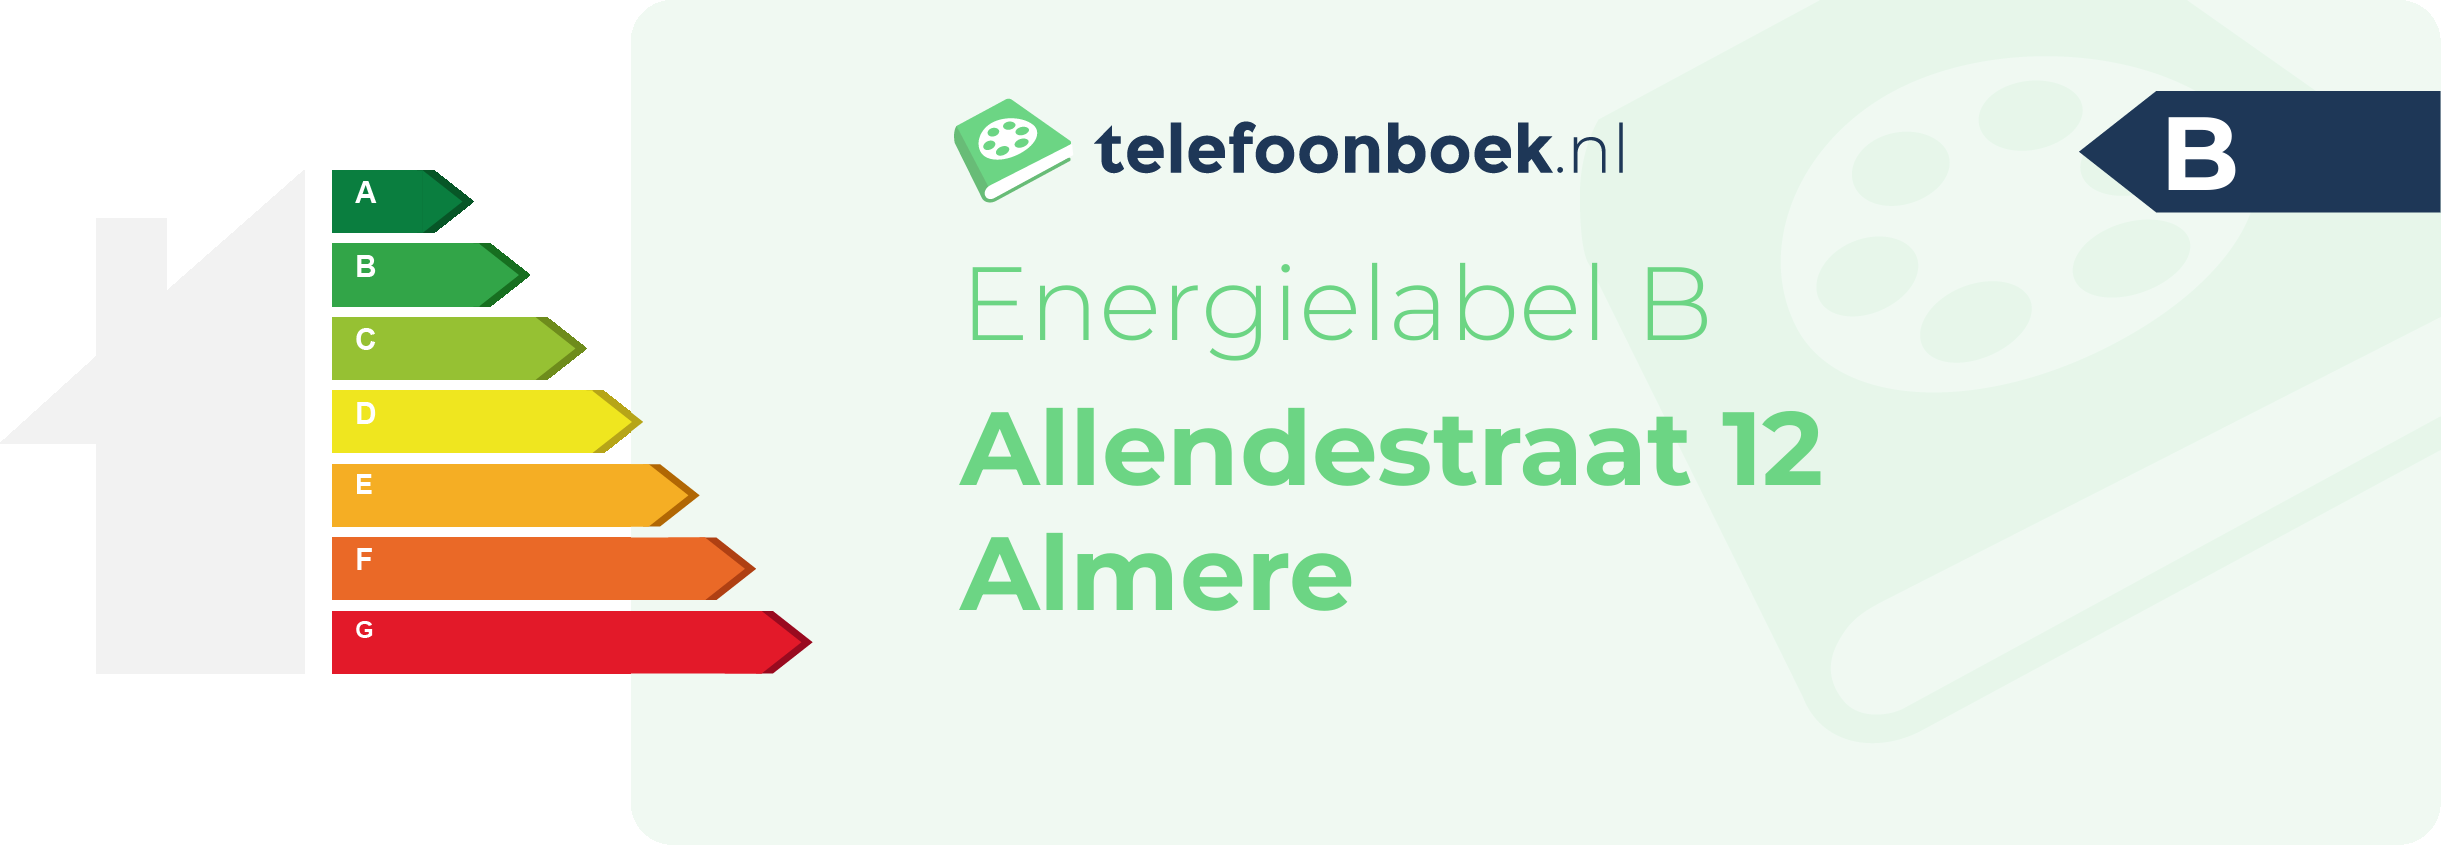 Energielabel Allendestraat 12 Almere